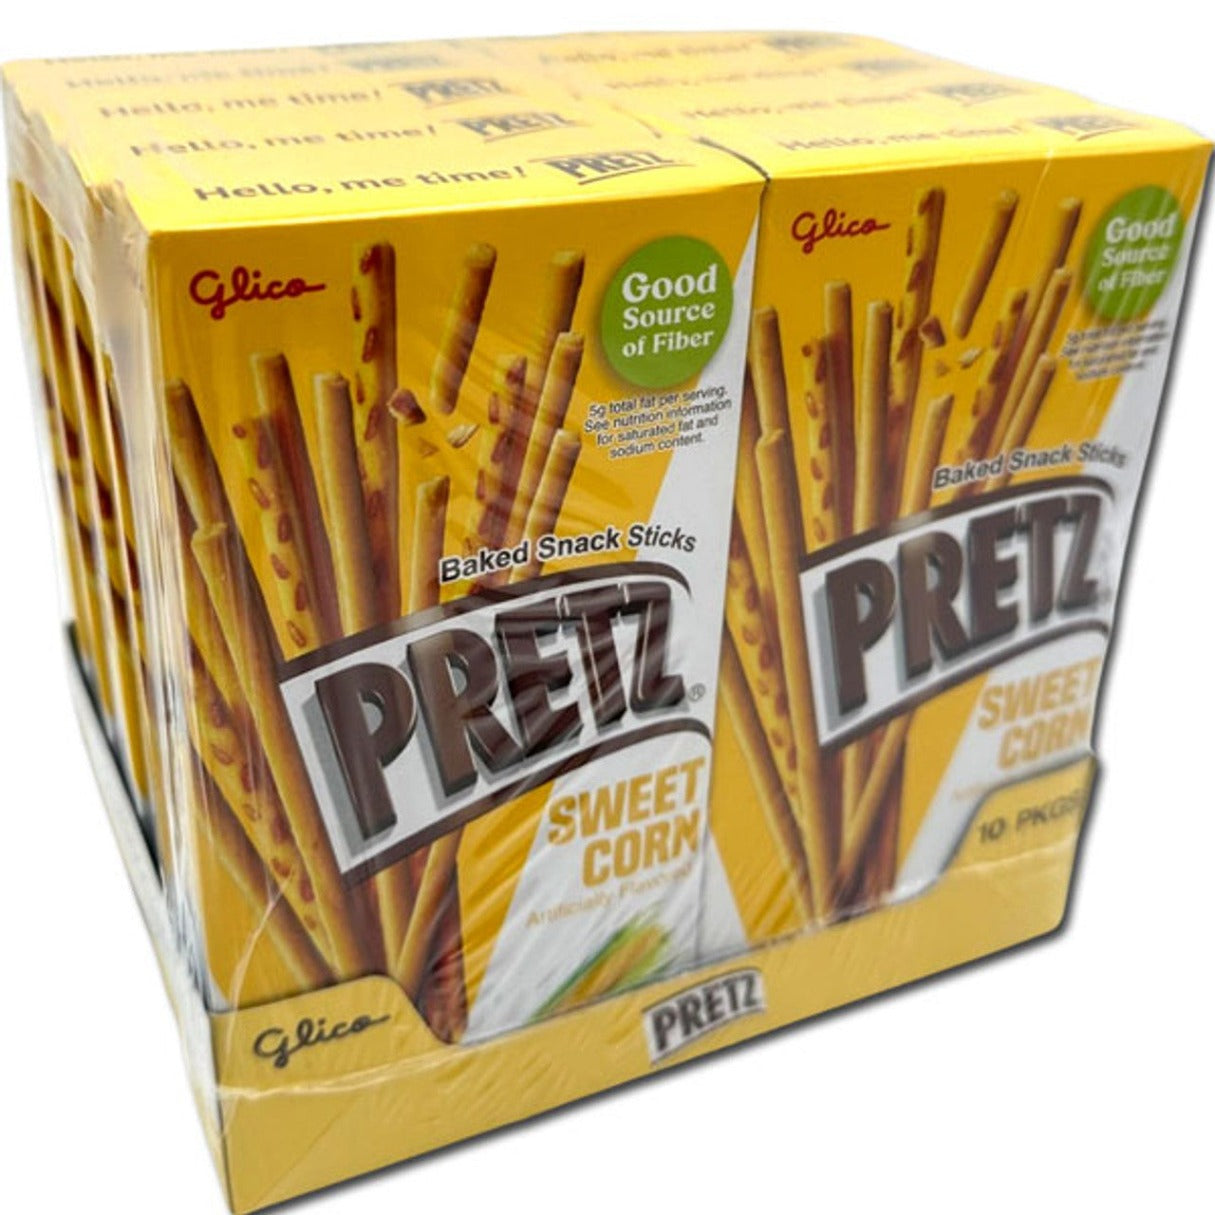 Glico Pretz Sweet Corn Baked Snack Sticks 1.09oz - 10ct